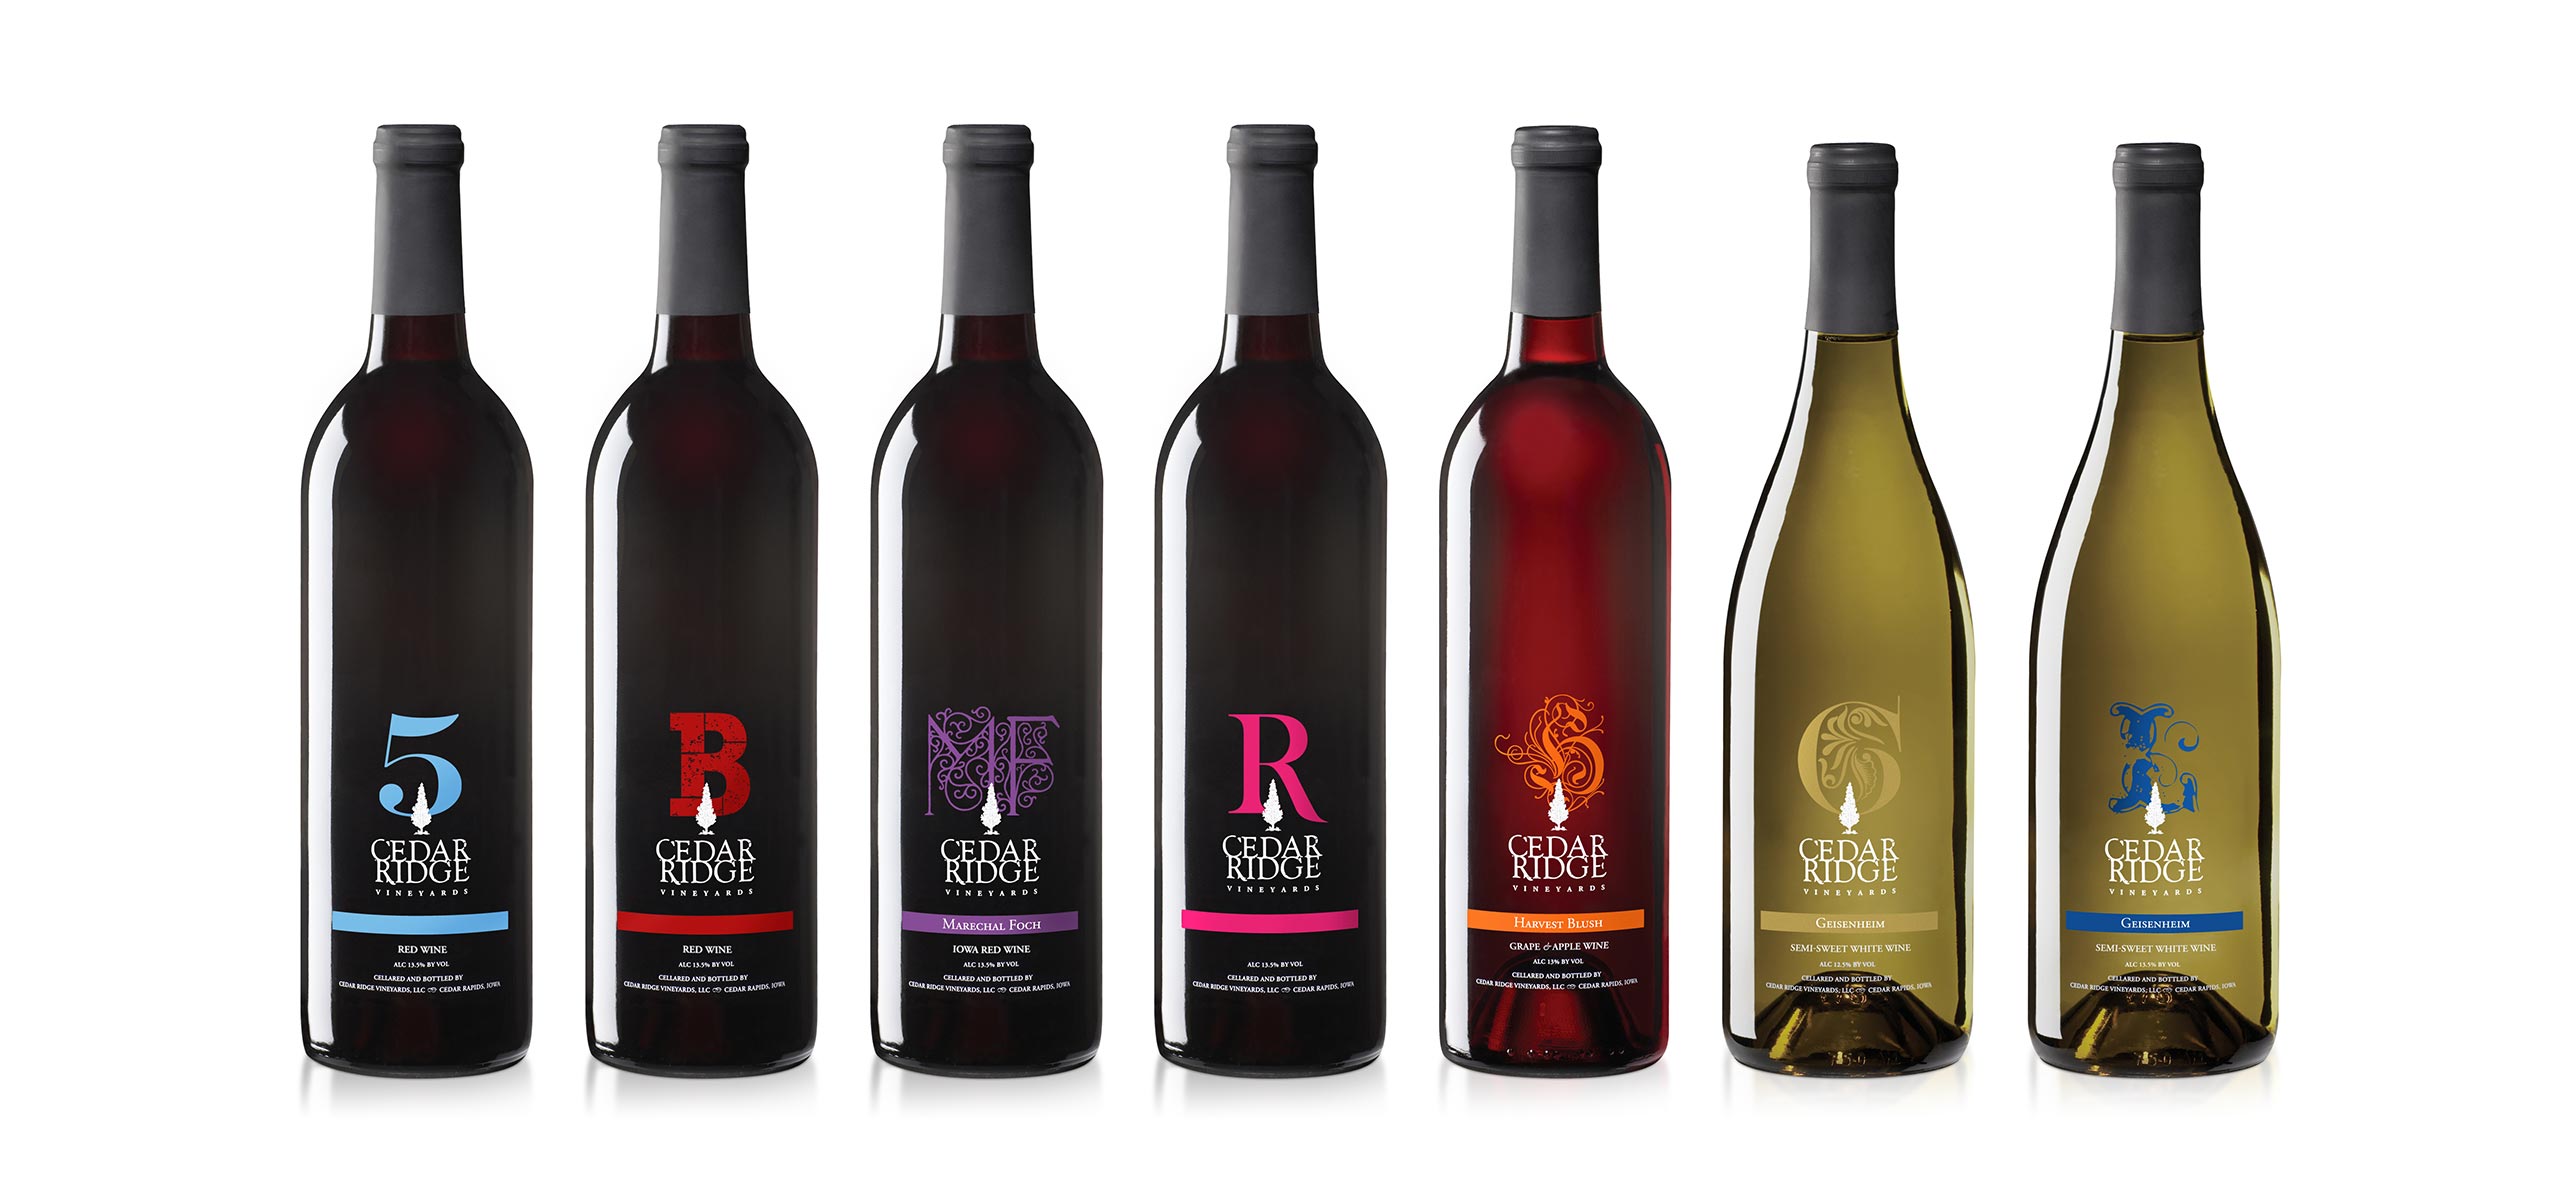 Cedar Ridge wine bottle lineup